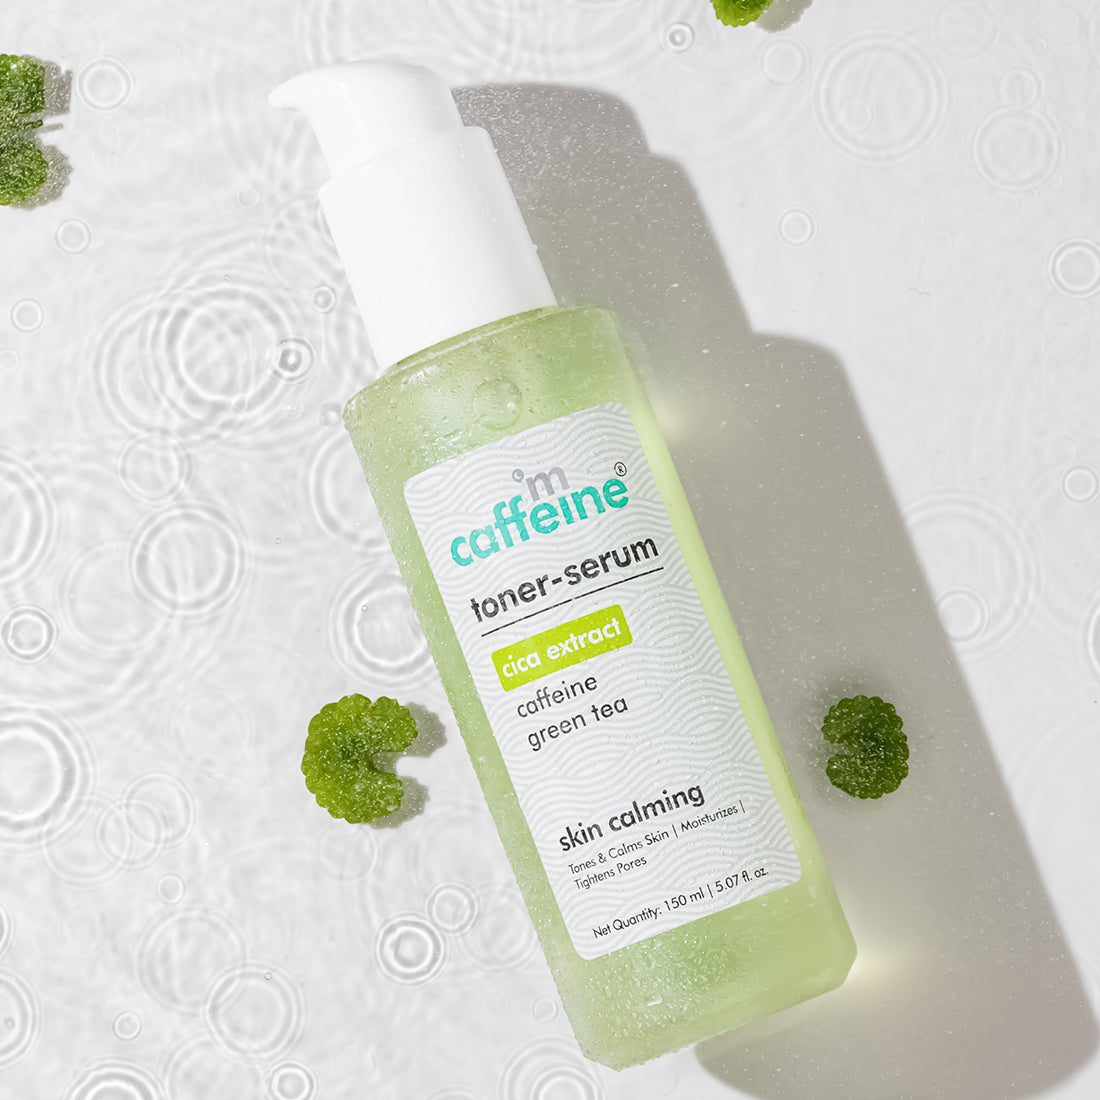 mCaffeine Cica 2in1 Toner-Serum with Green Tea - Calms & Tones Skin, Tightens Pores & Moisturizes